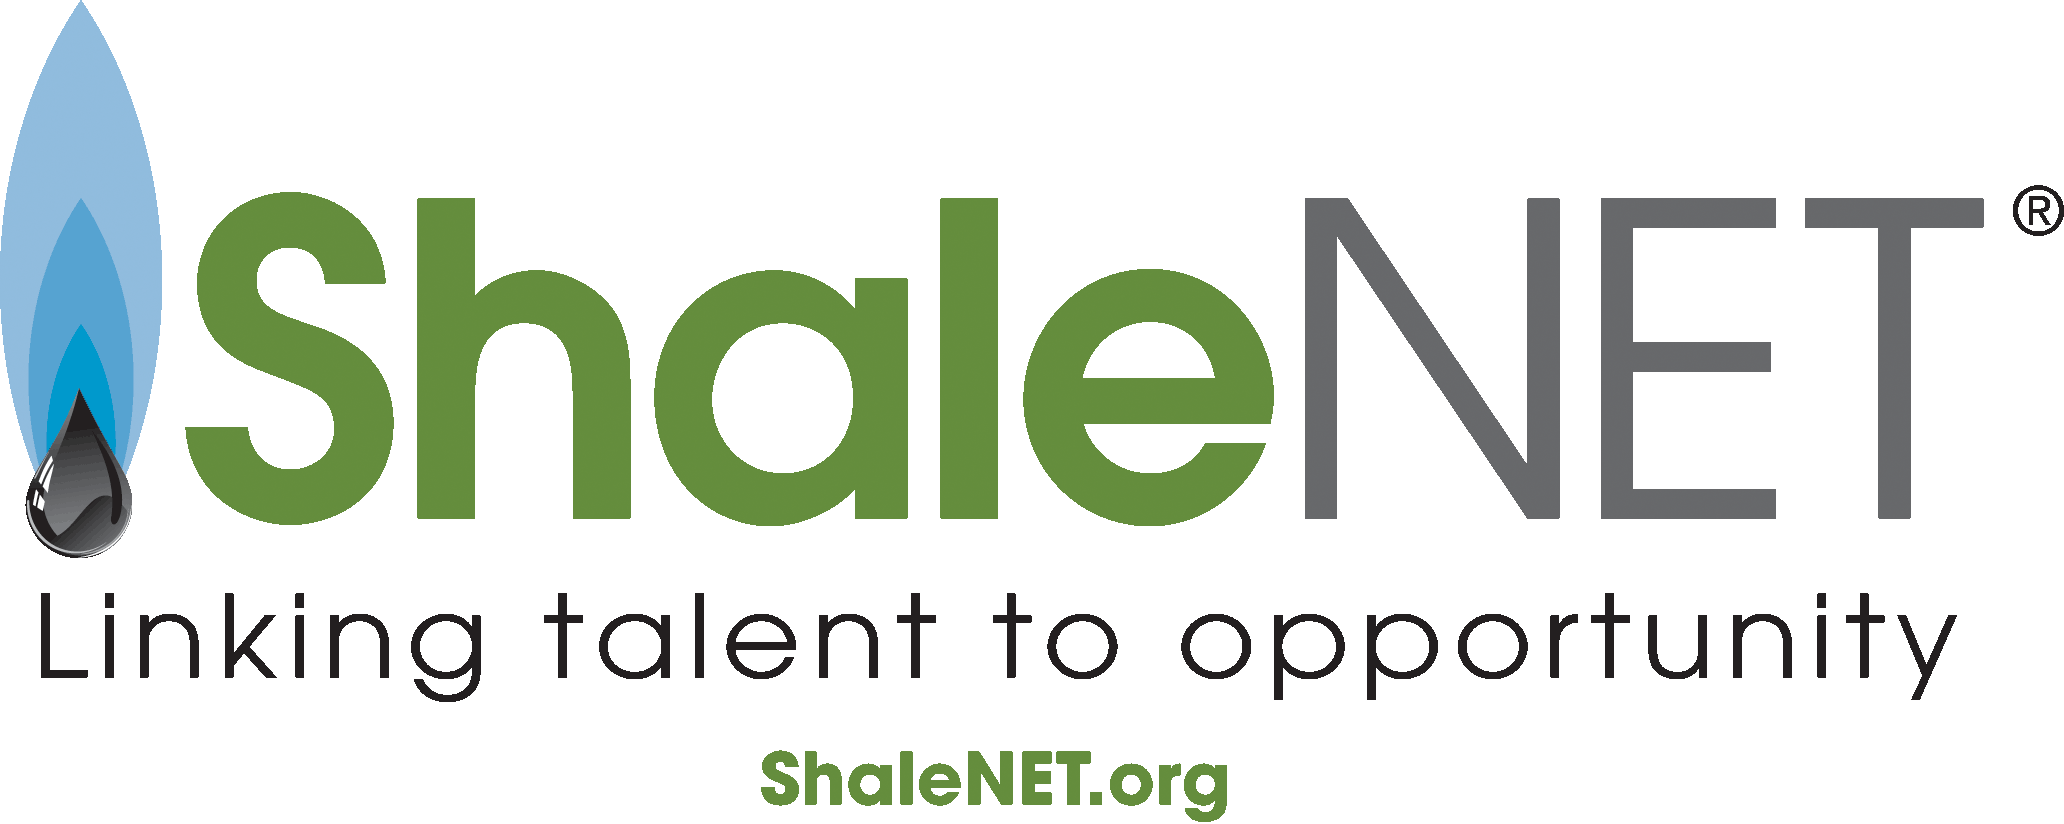 ShaleNet